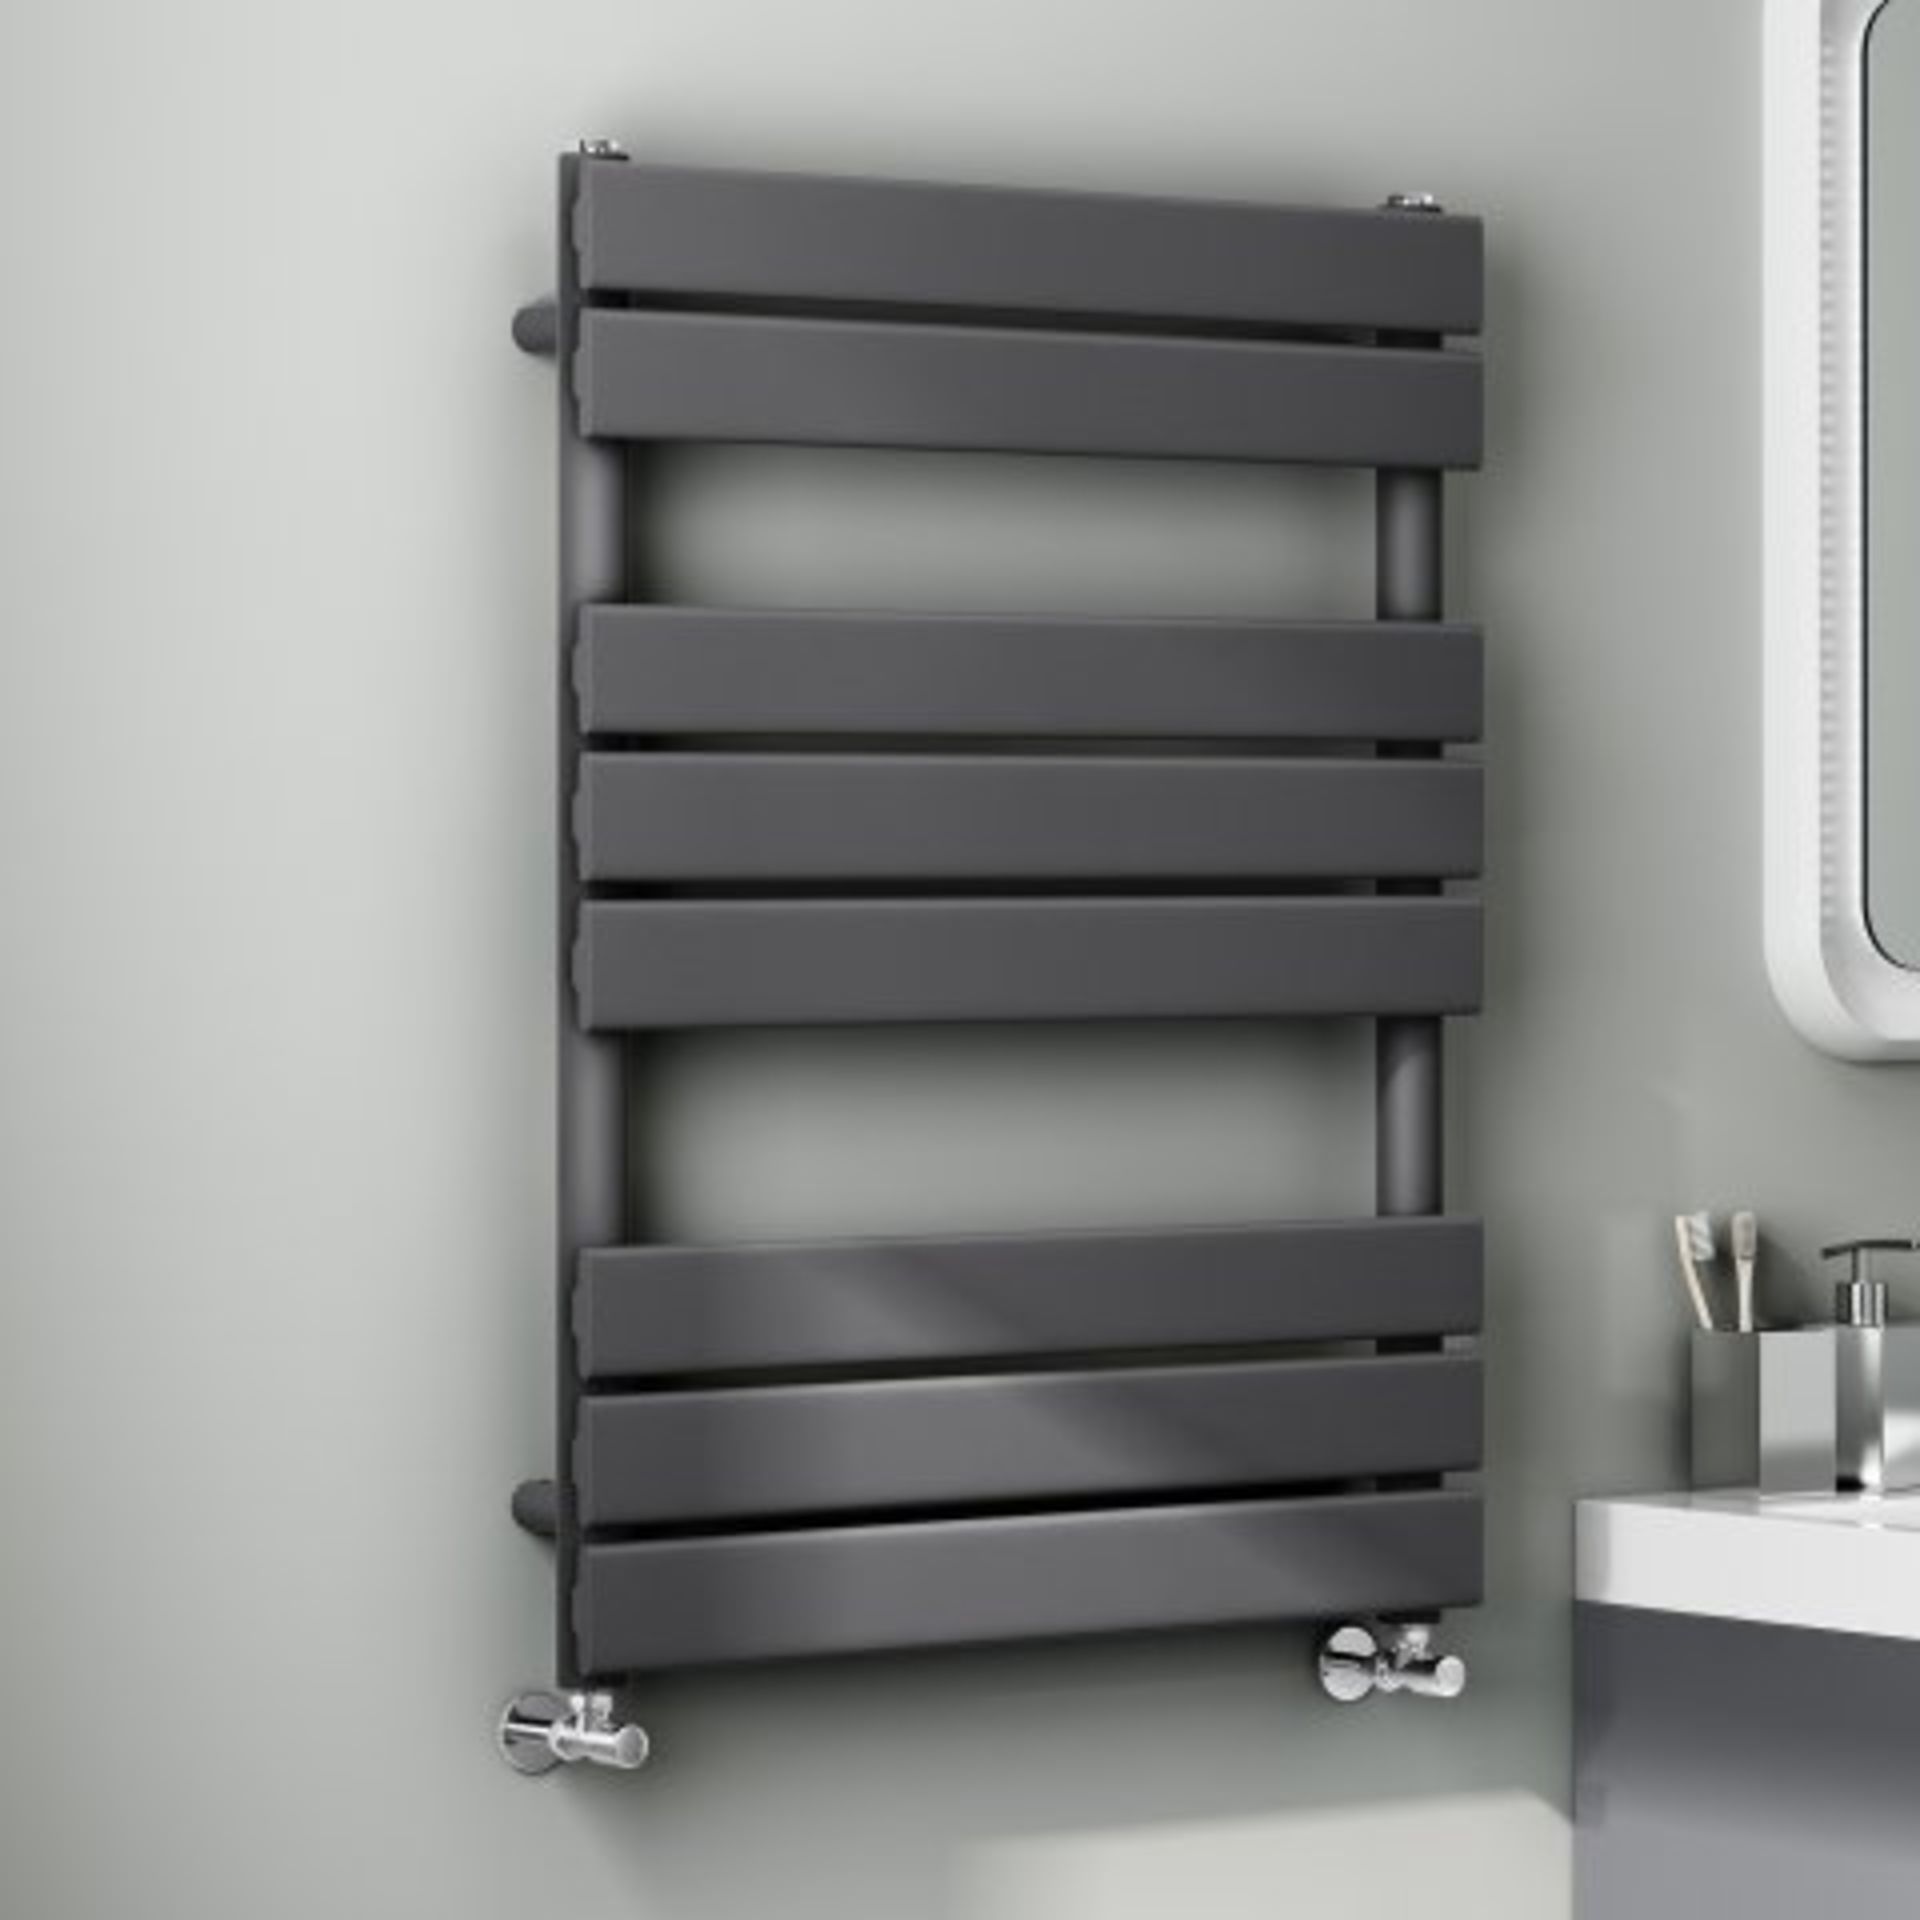 (O24) 800x600mm Anthracite Flat Panel Ladder Towel Radiator. RRP £249.99. Stylishly sleek panels set